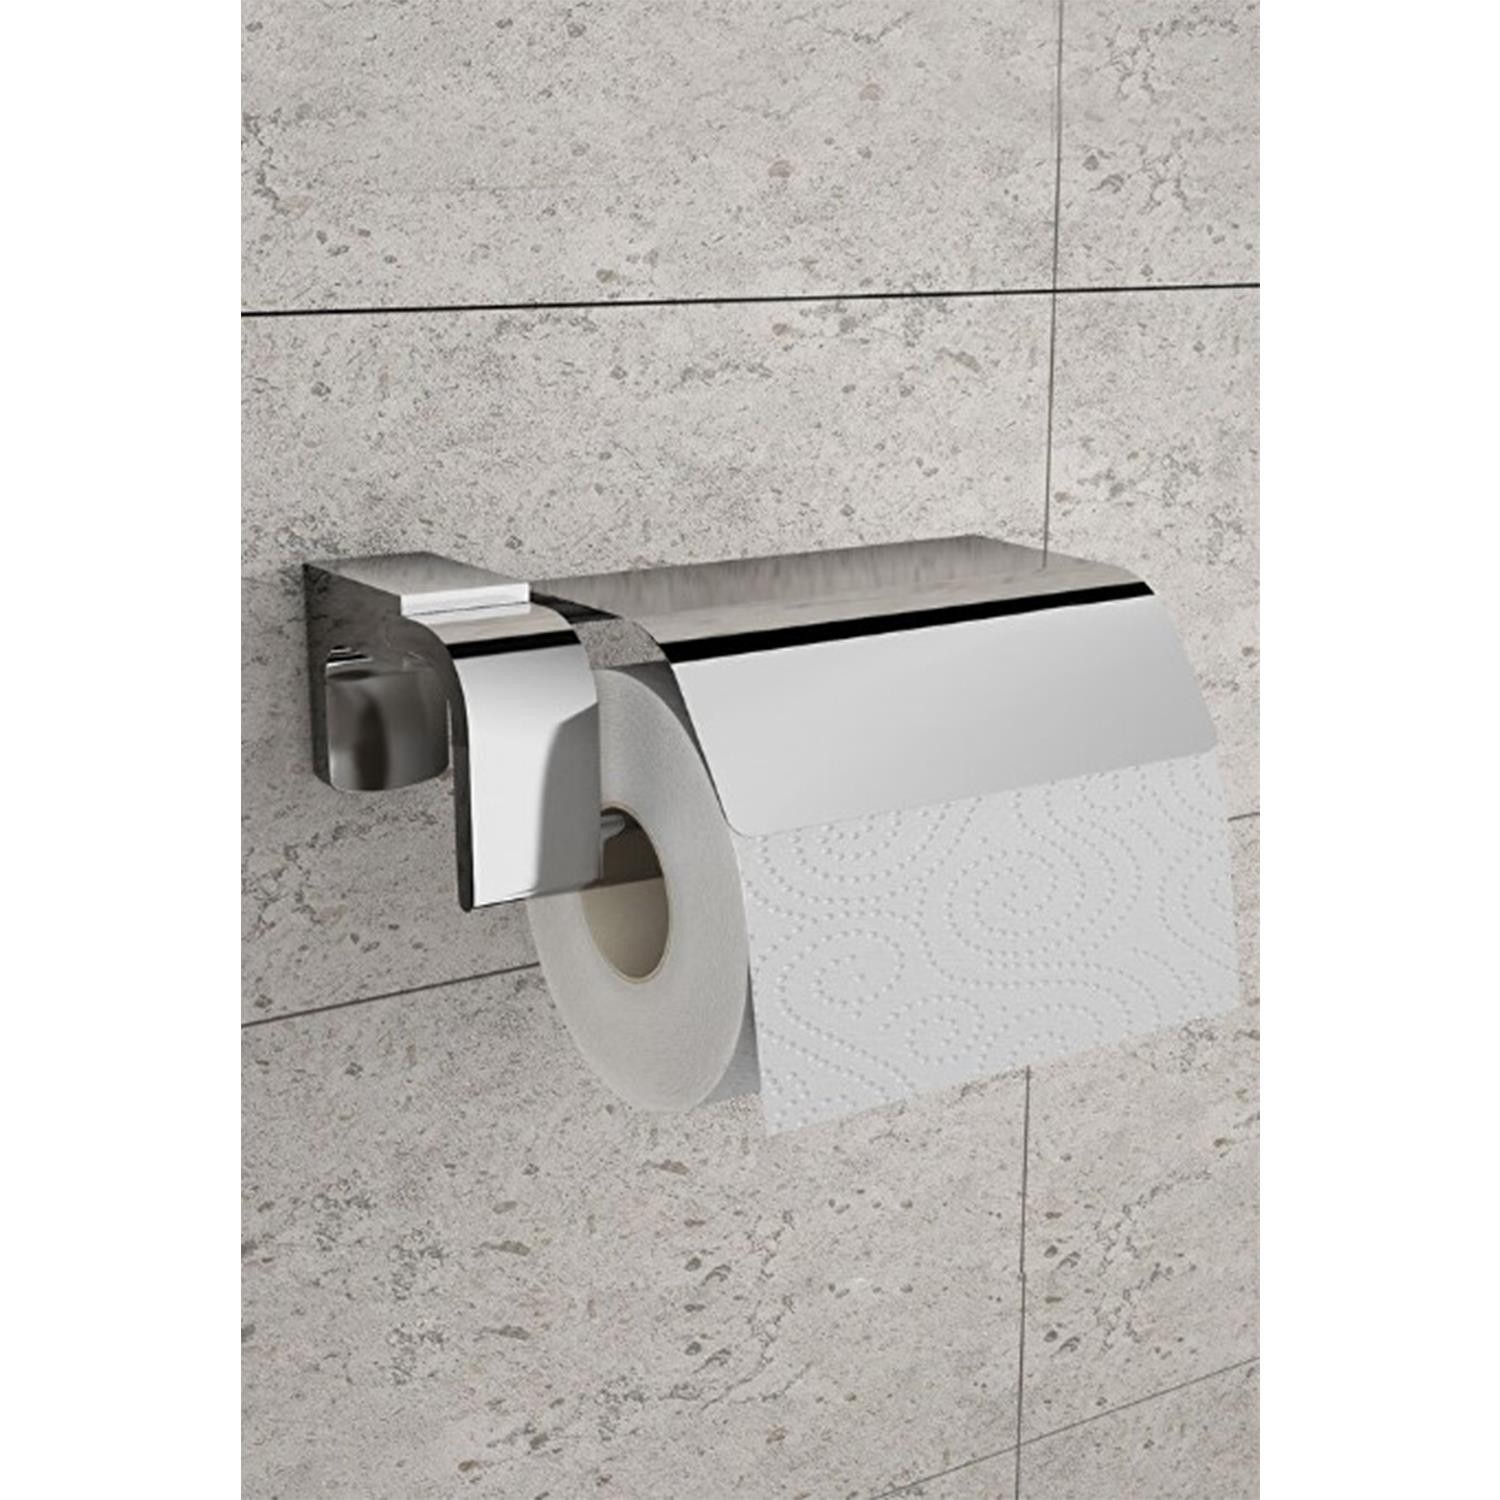 Tuvalet Kağıtlık Aparat WC Kağıt Standı Kapaklı Paslanmaz Metal Sağlam Kaliteli Krom